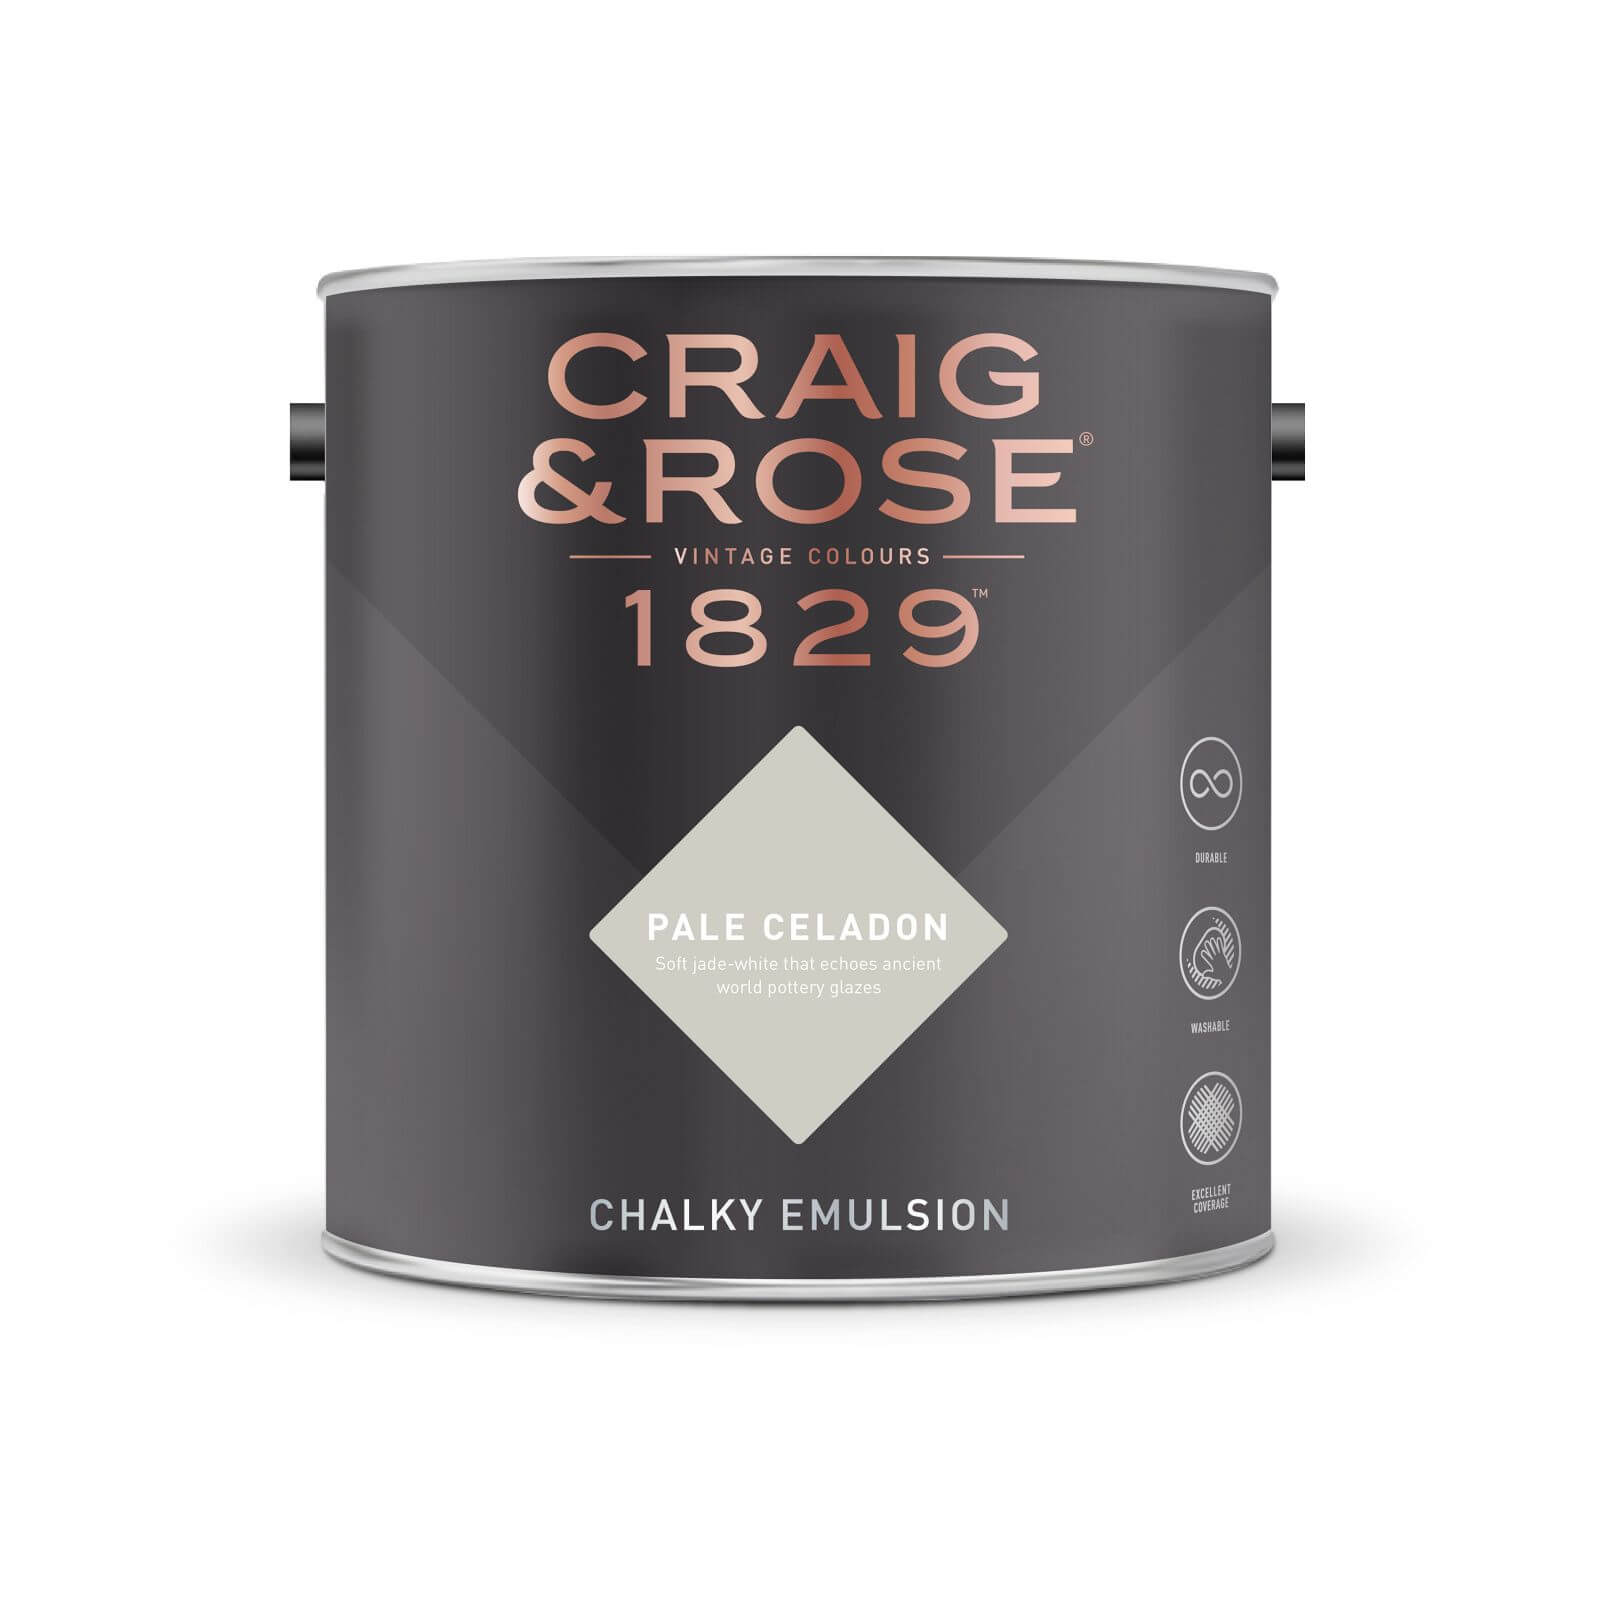 Craig & Rose 1829 Chalky Emulsion Paint Pale Celadon - Tester 50ml